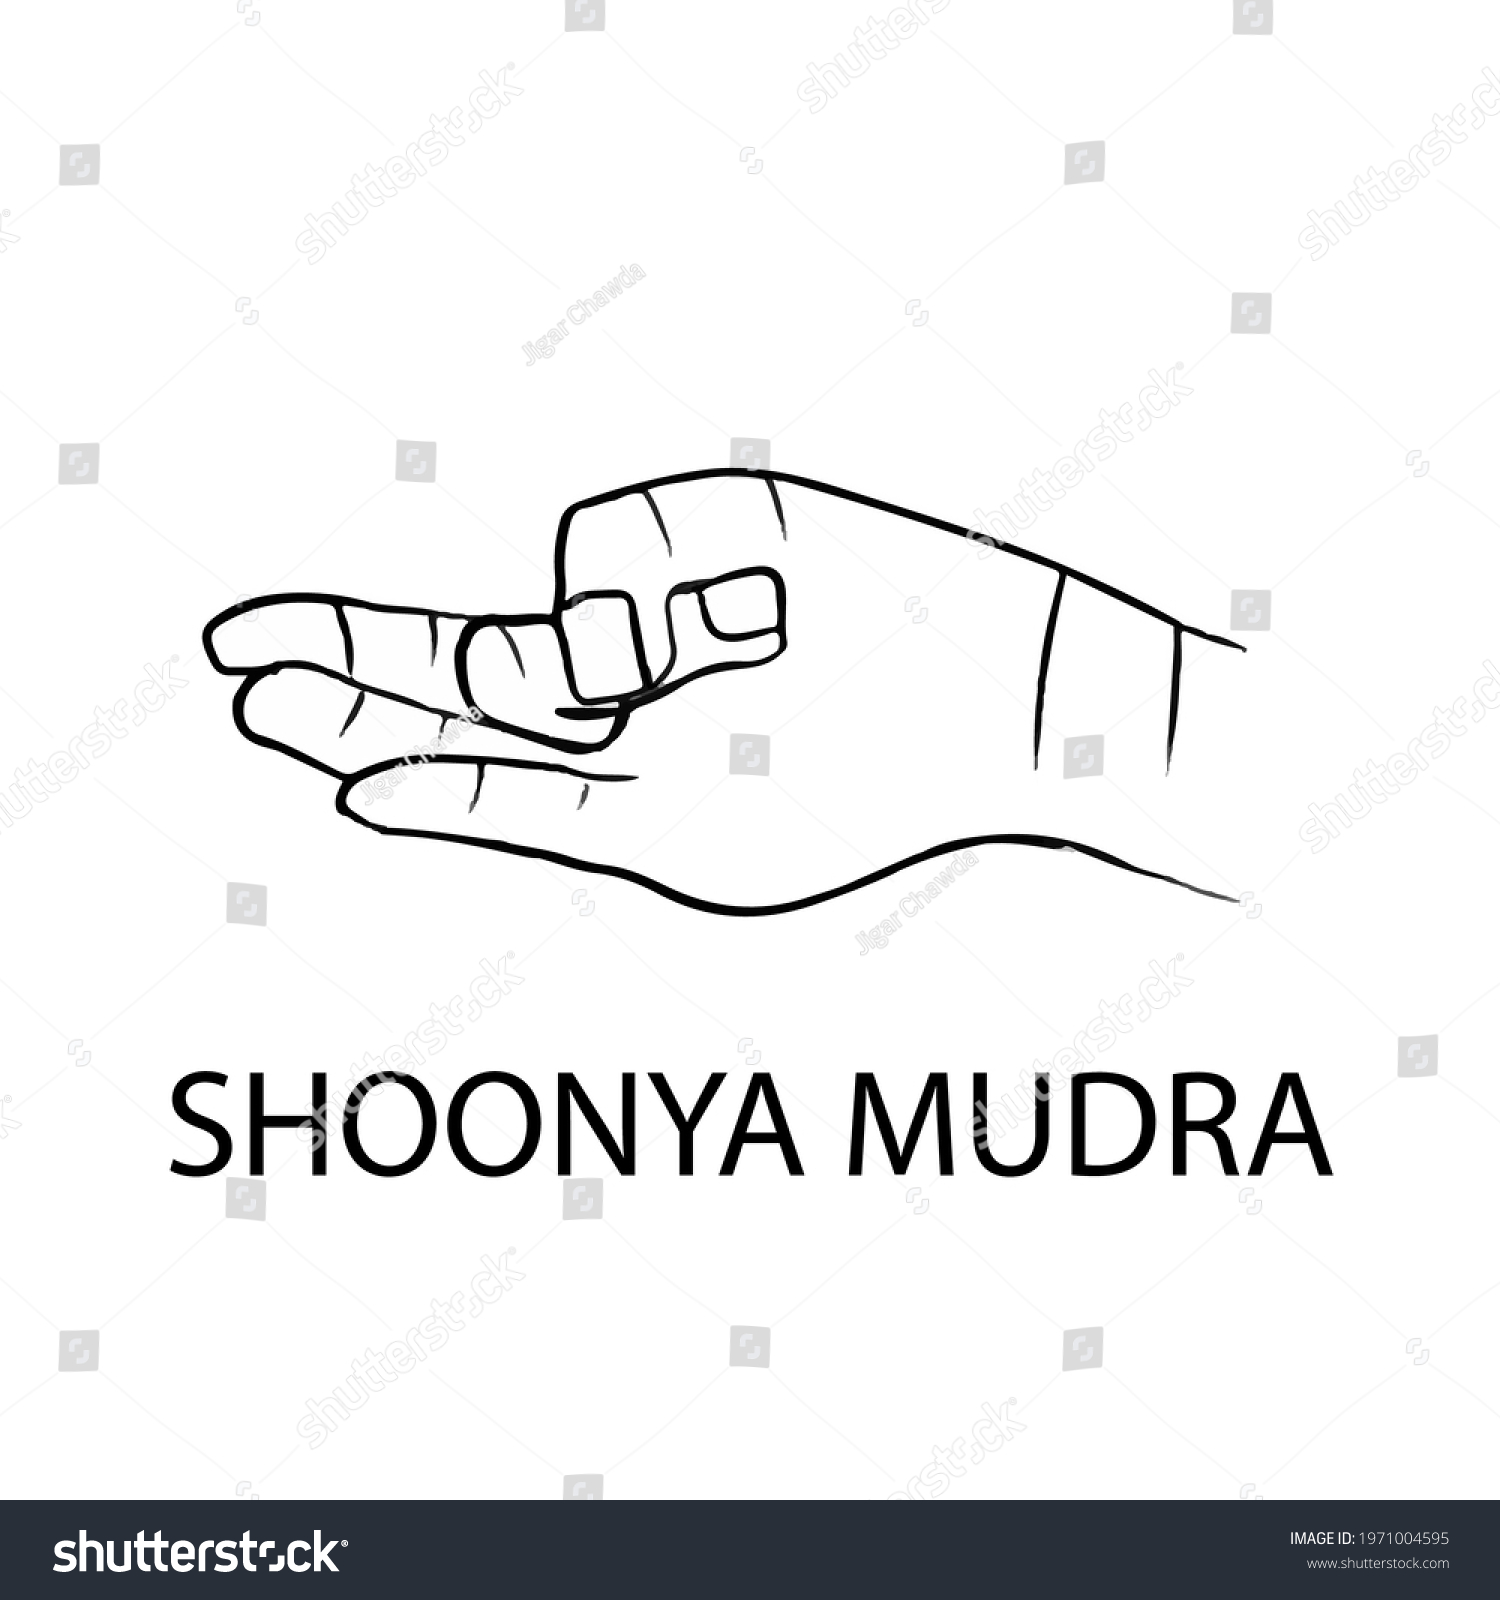 shoonya mudra hand gesture vector image - Royalty Free Stock Vector ...